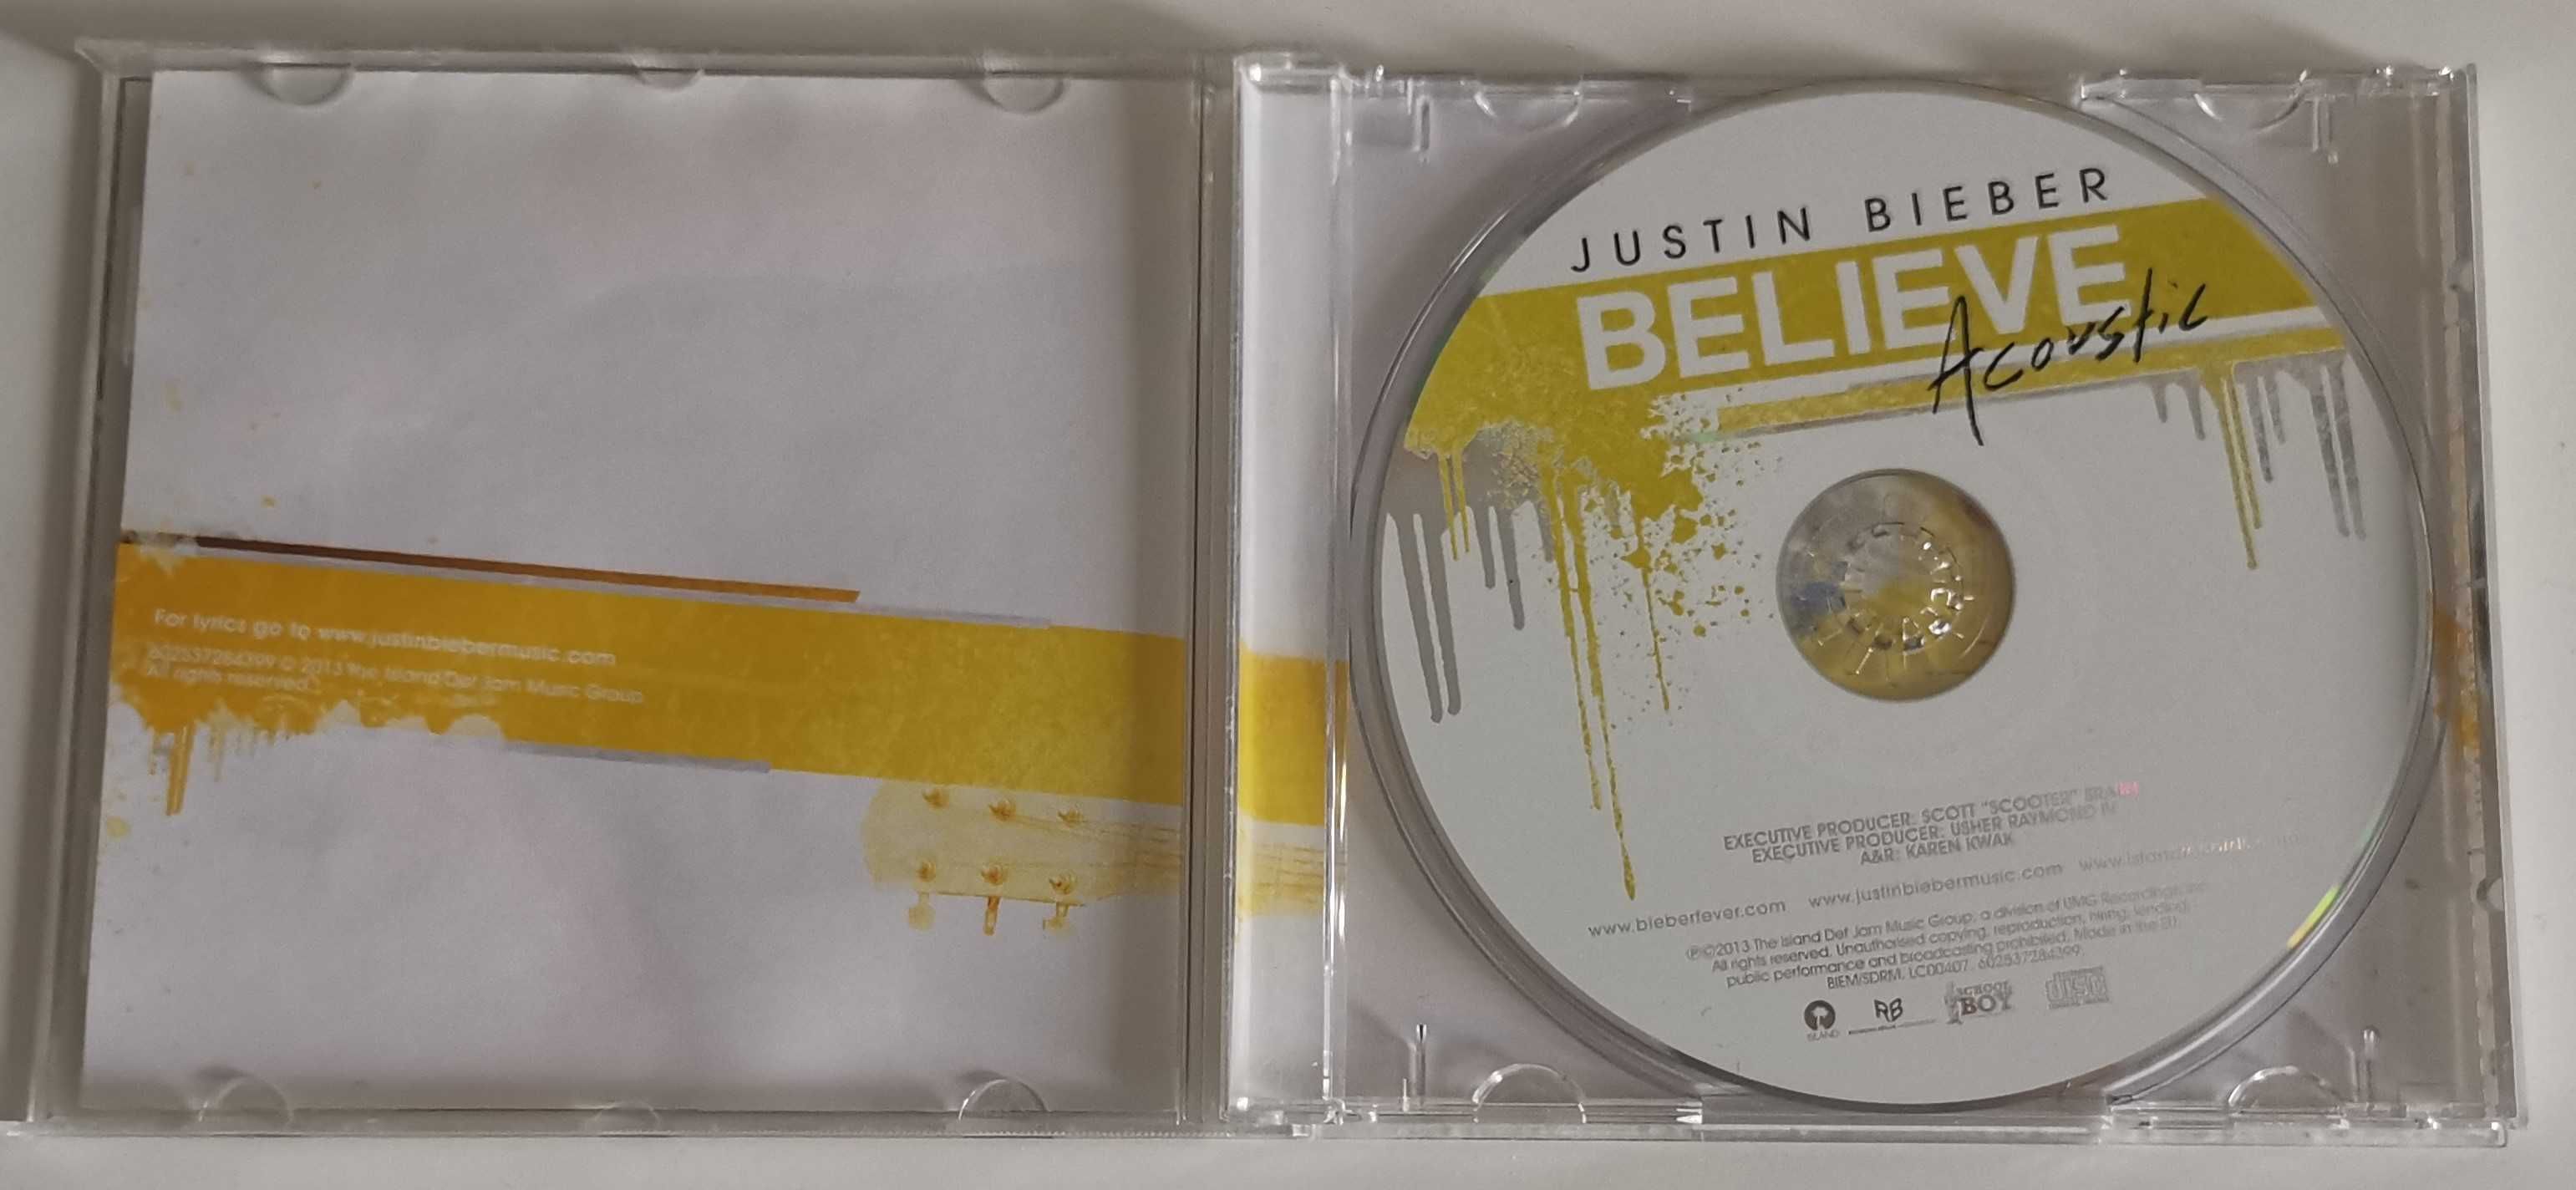 Justin Bieber – Believe Acoustic, CD